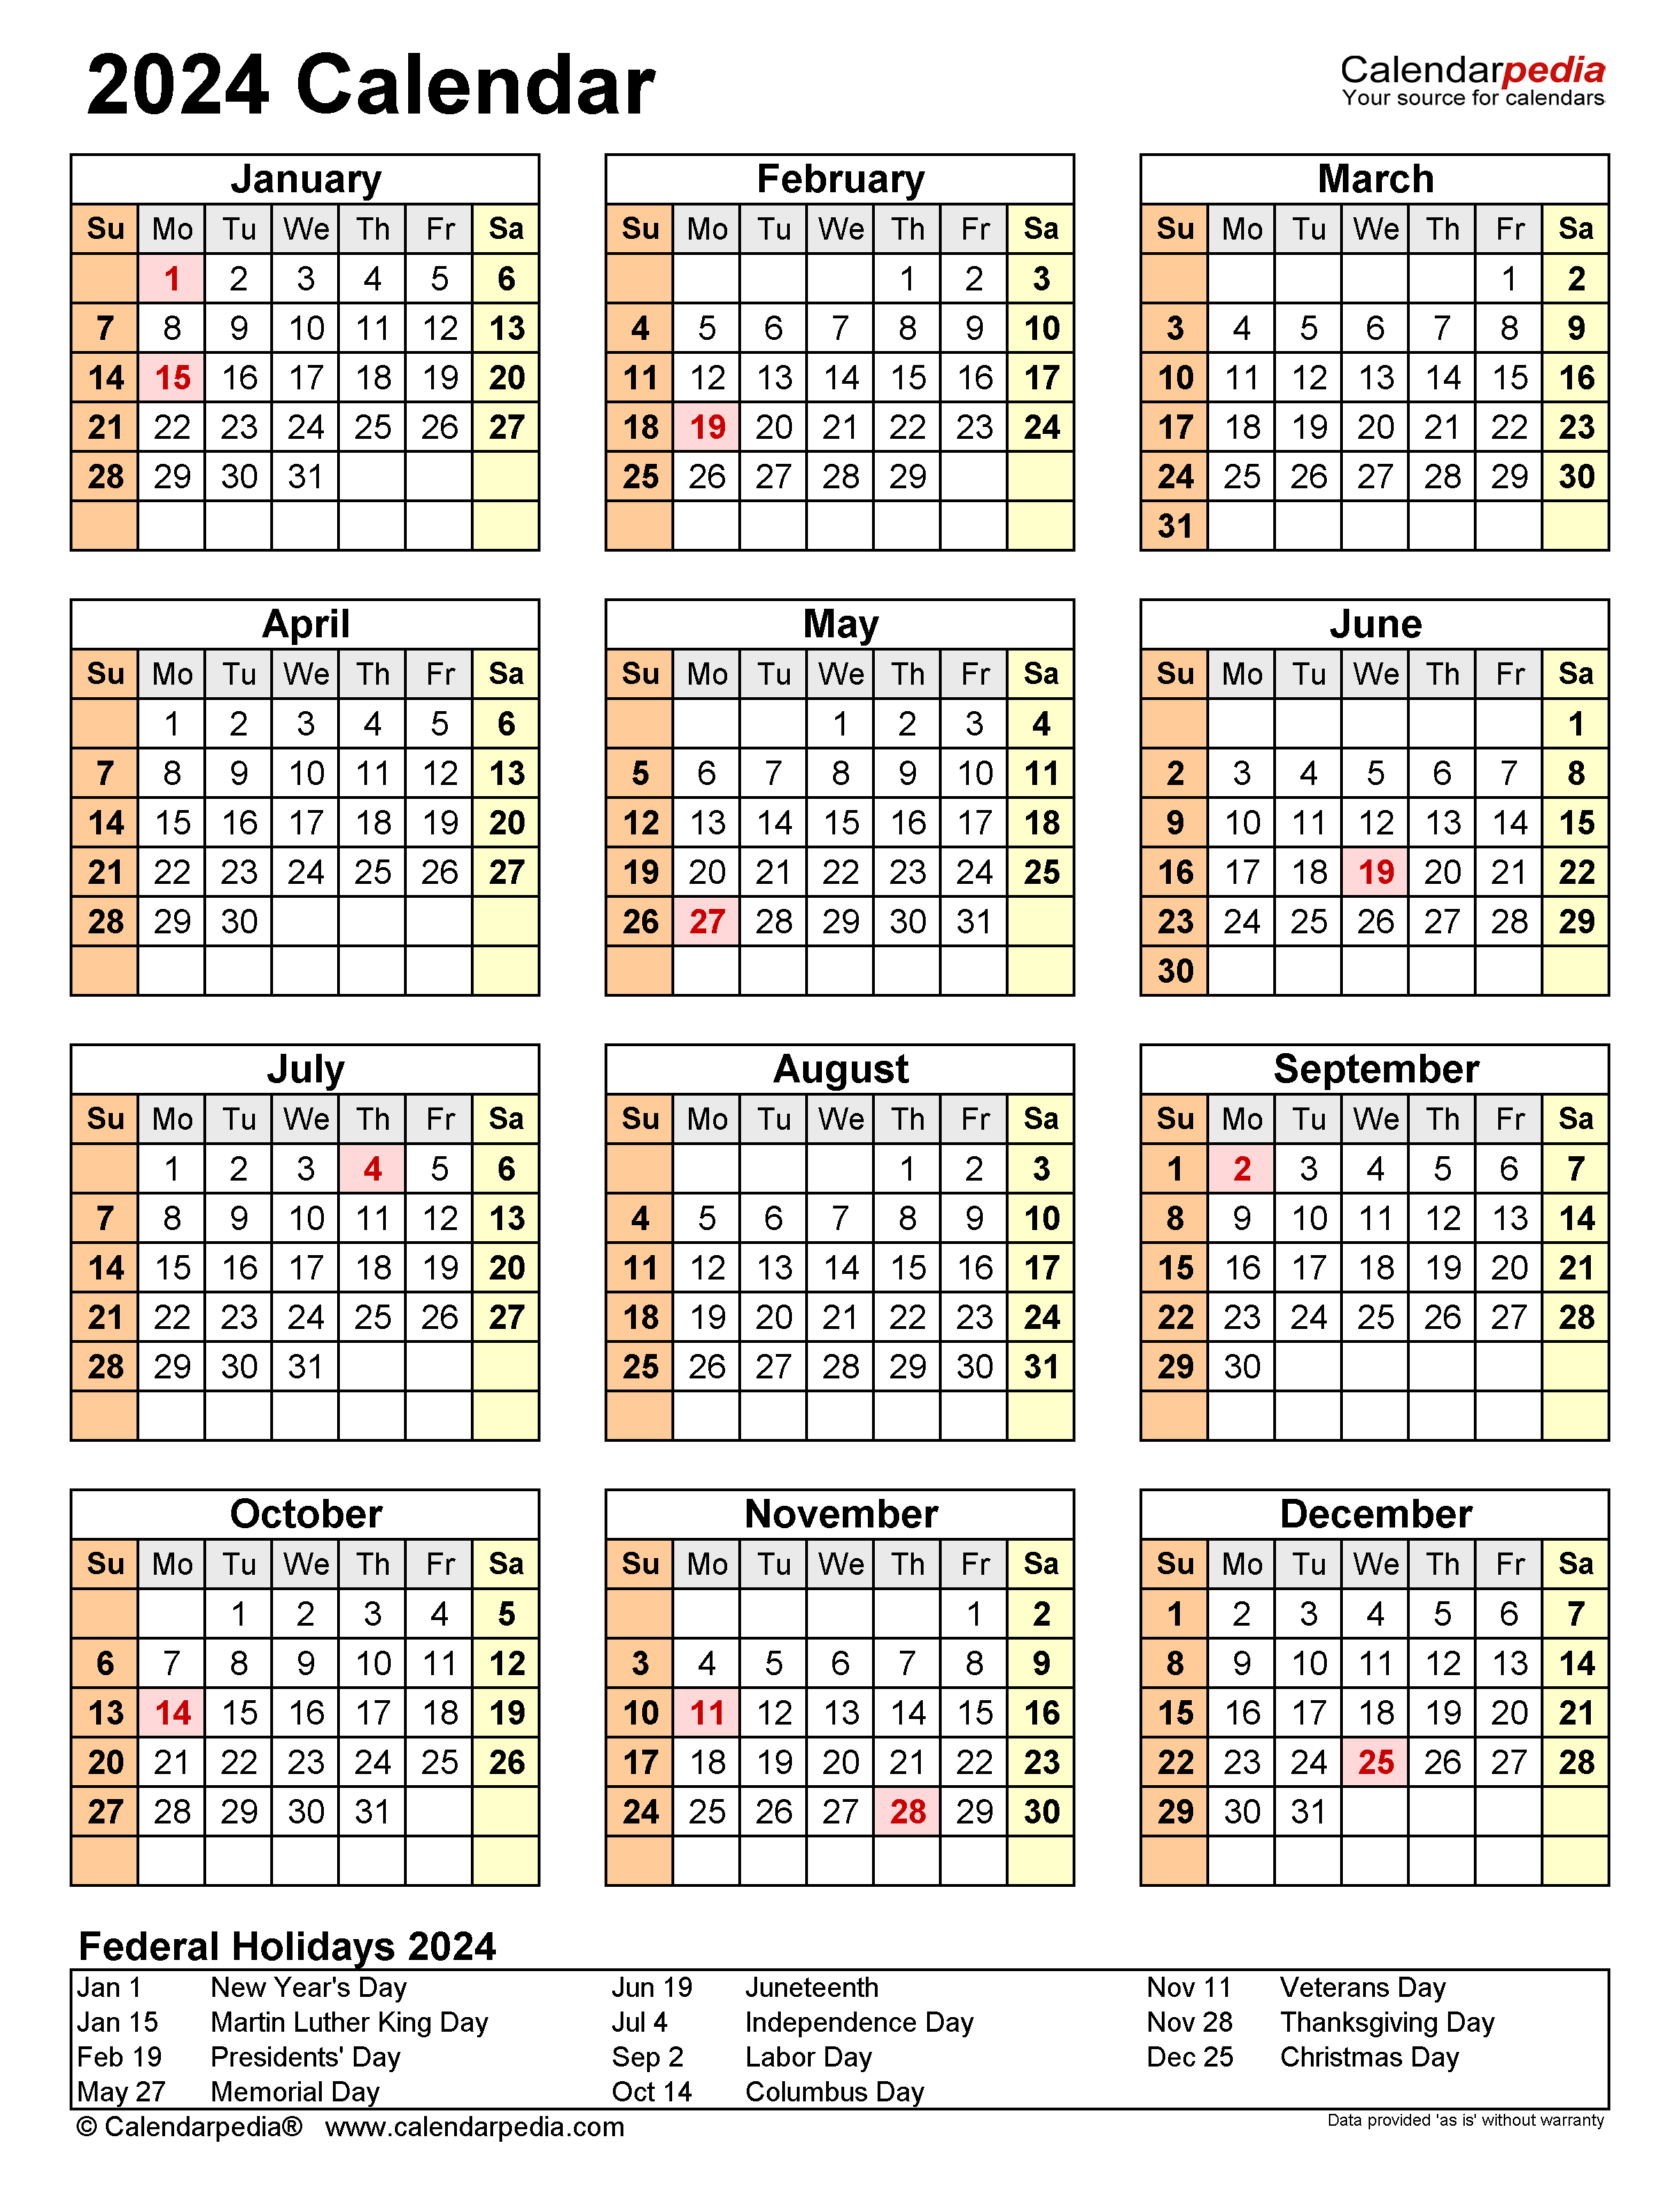 Free Printable 2024 Calendar With Holidays Crownflourmills - Free Printable 2024 Calendar With Holidays June